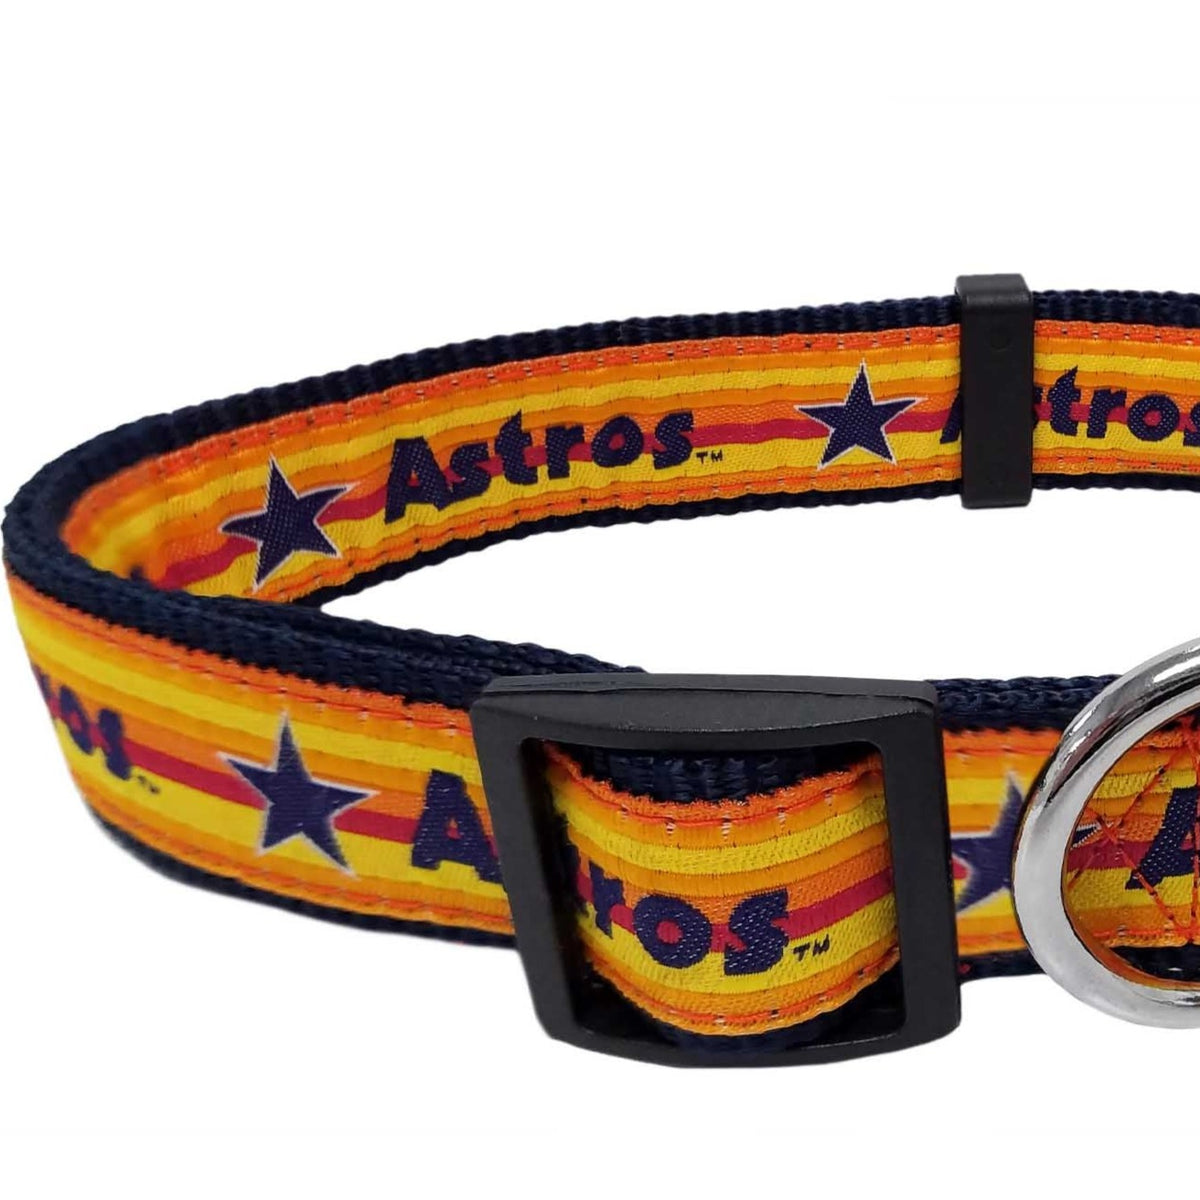 Houston Astros Orange Dog Harness Size S